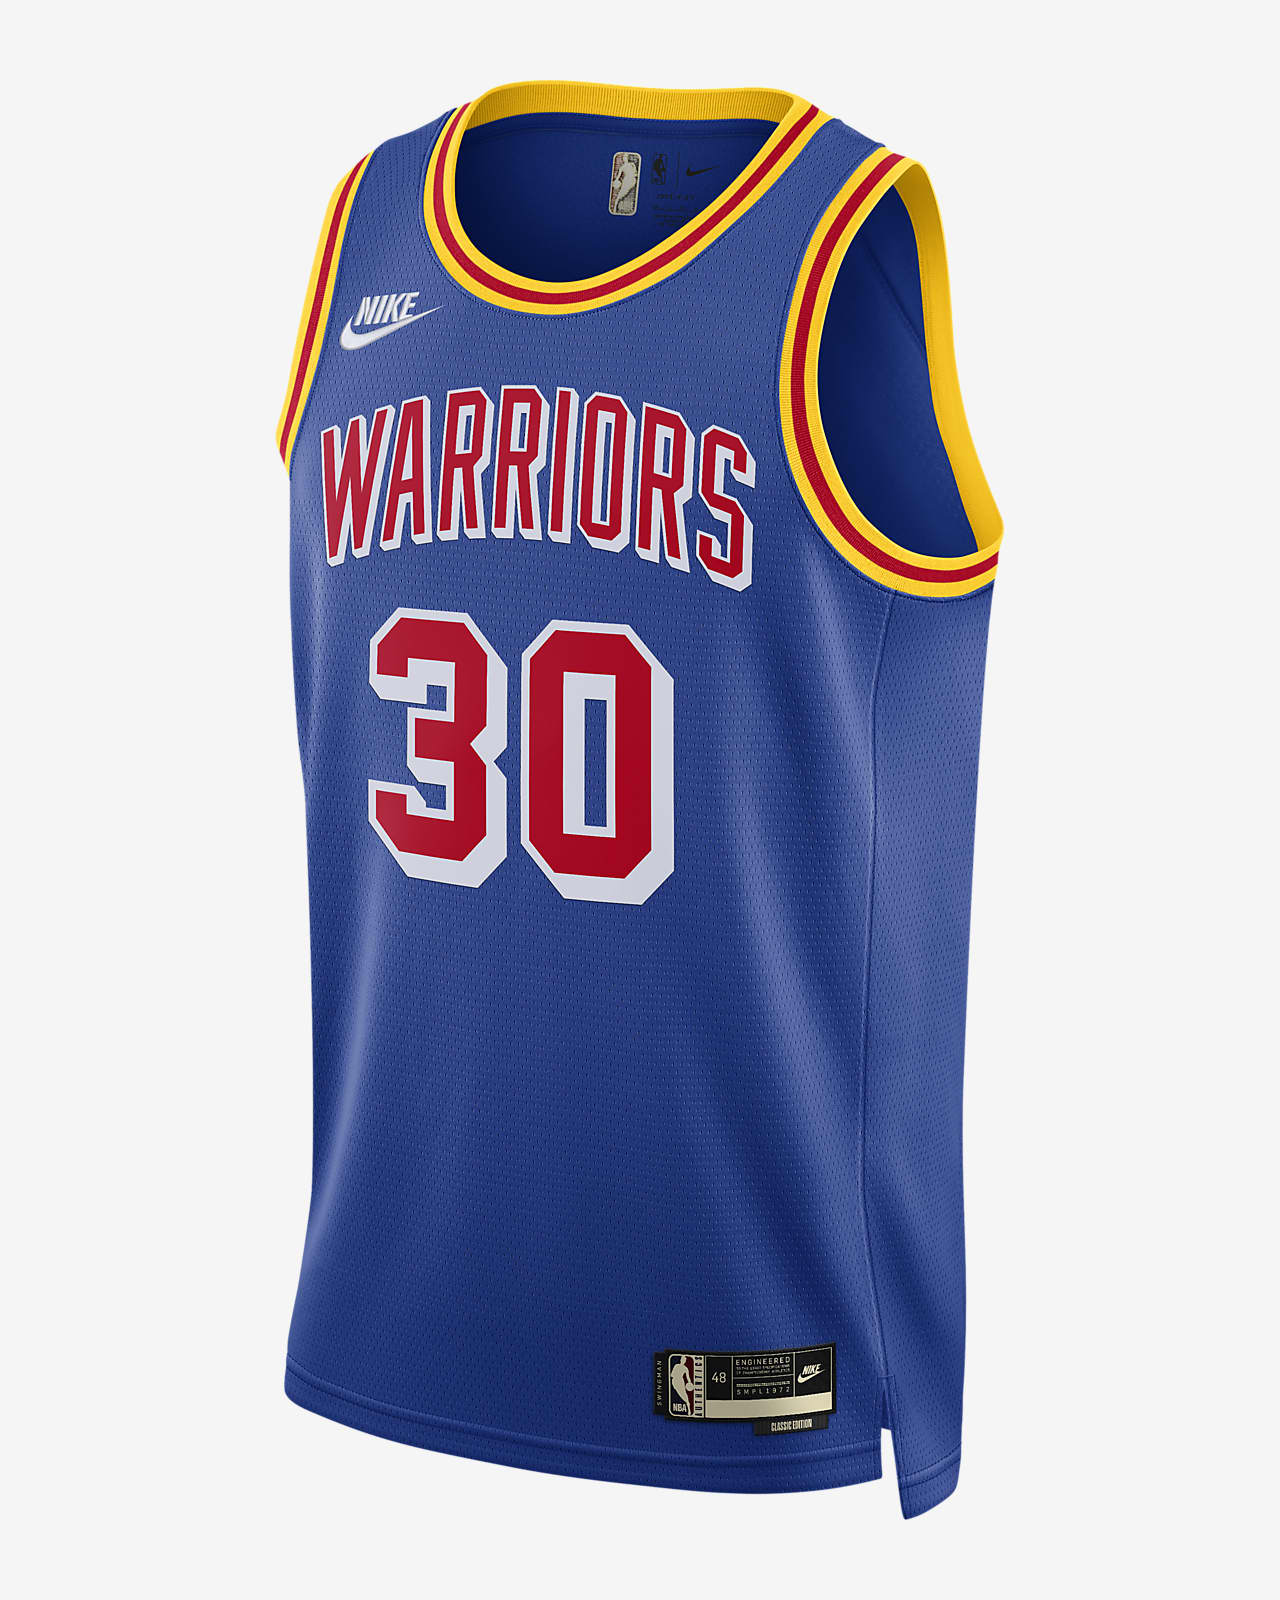 Golden State Warriors Classic Edition Nike Dri-FIT NBA Swingman 球衣